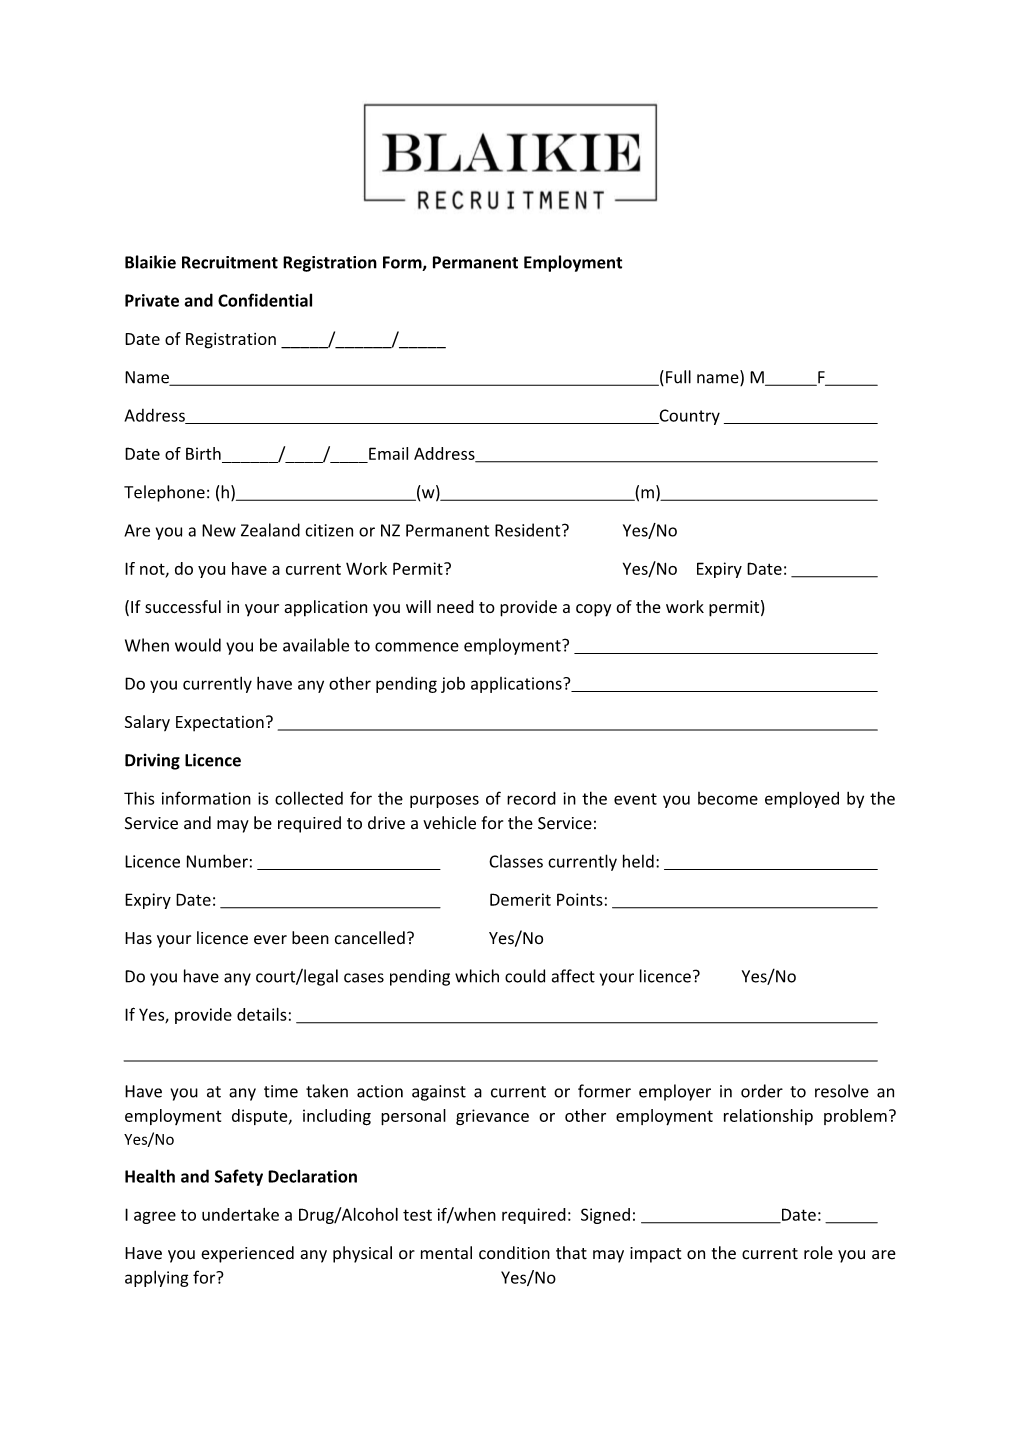 Blaikie Recruitment Registration Form, Permanent Employment